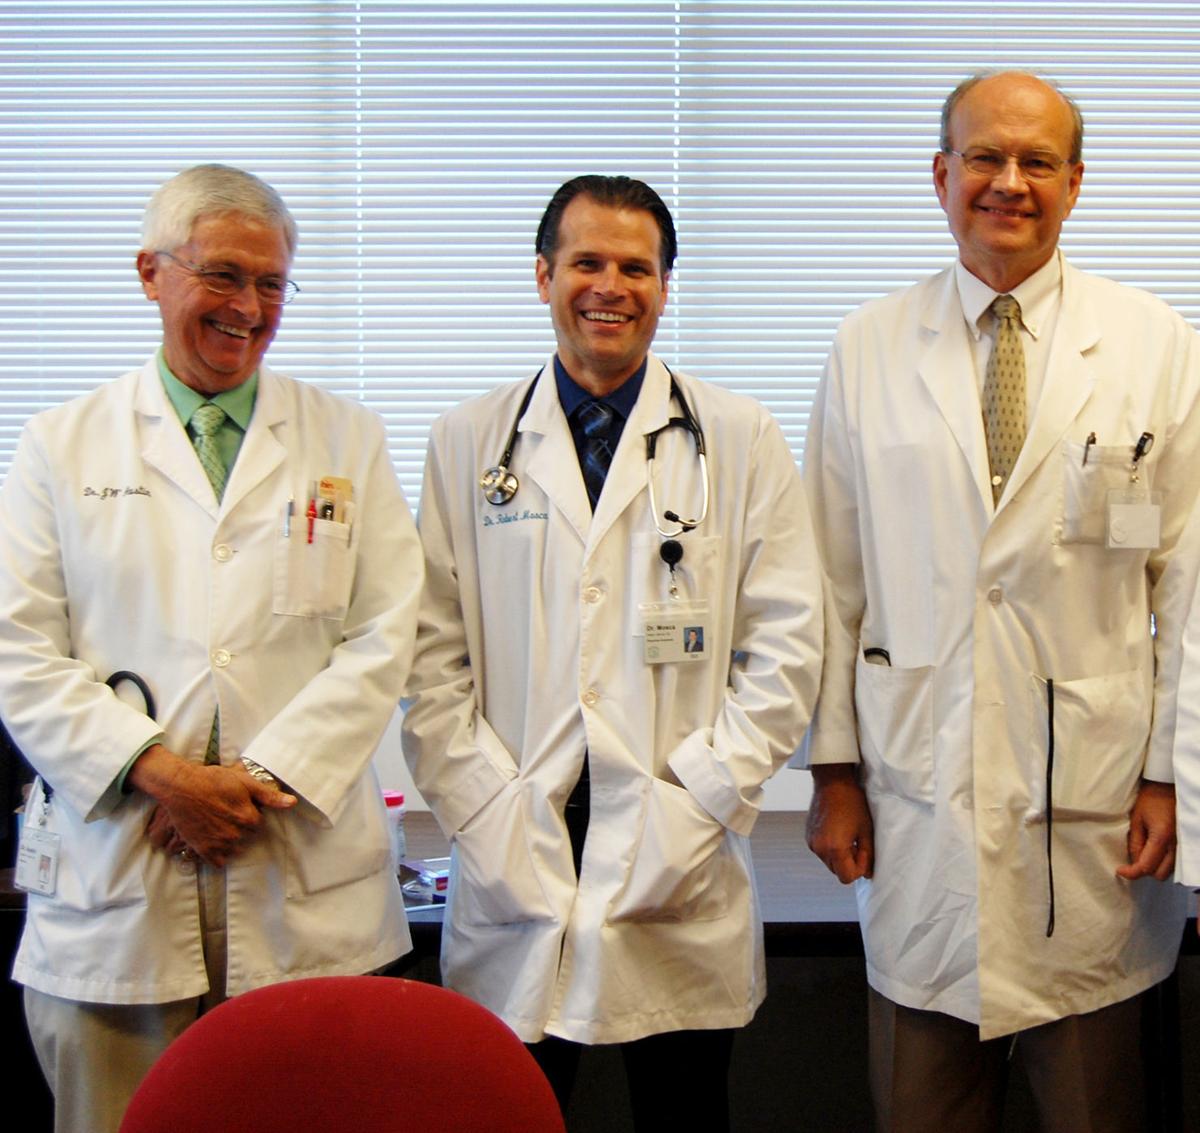 Doctors At Greeneville Internal Medicine Recognized For 'Excellent Care